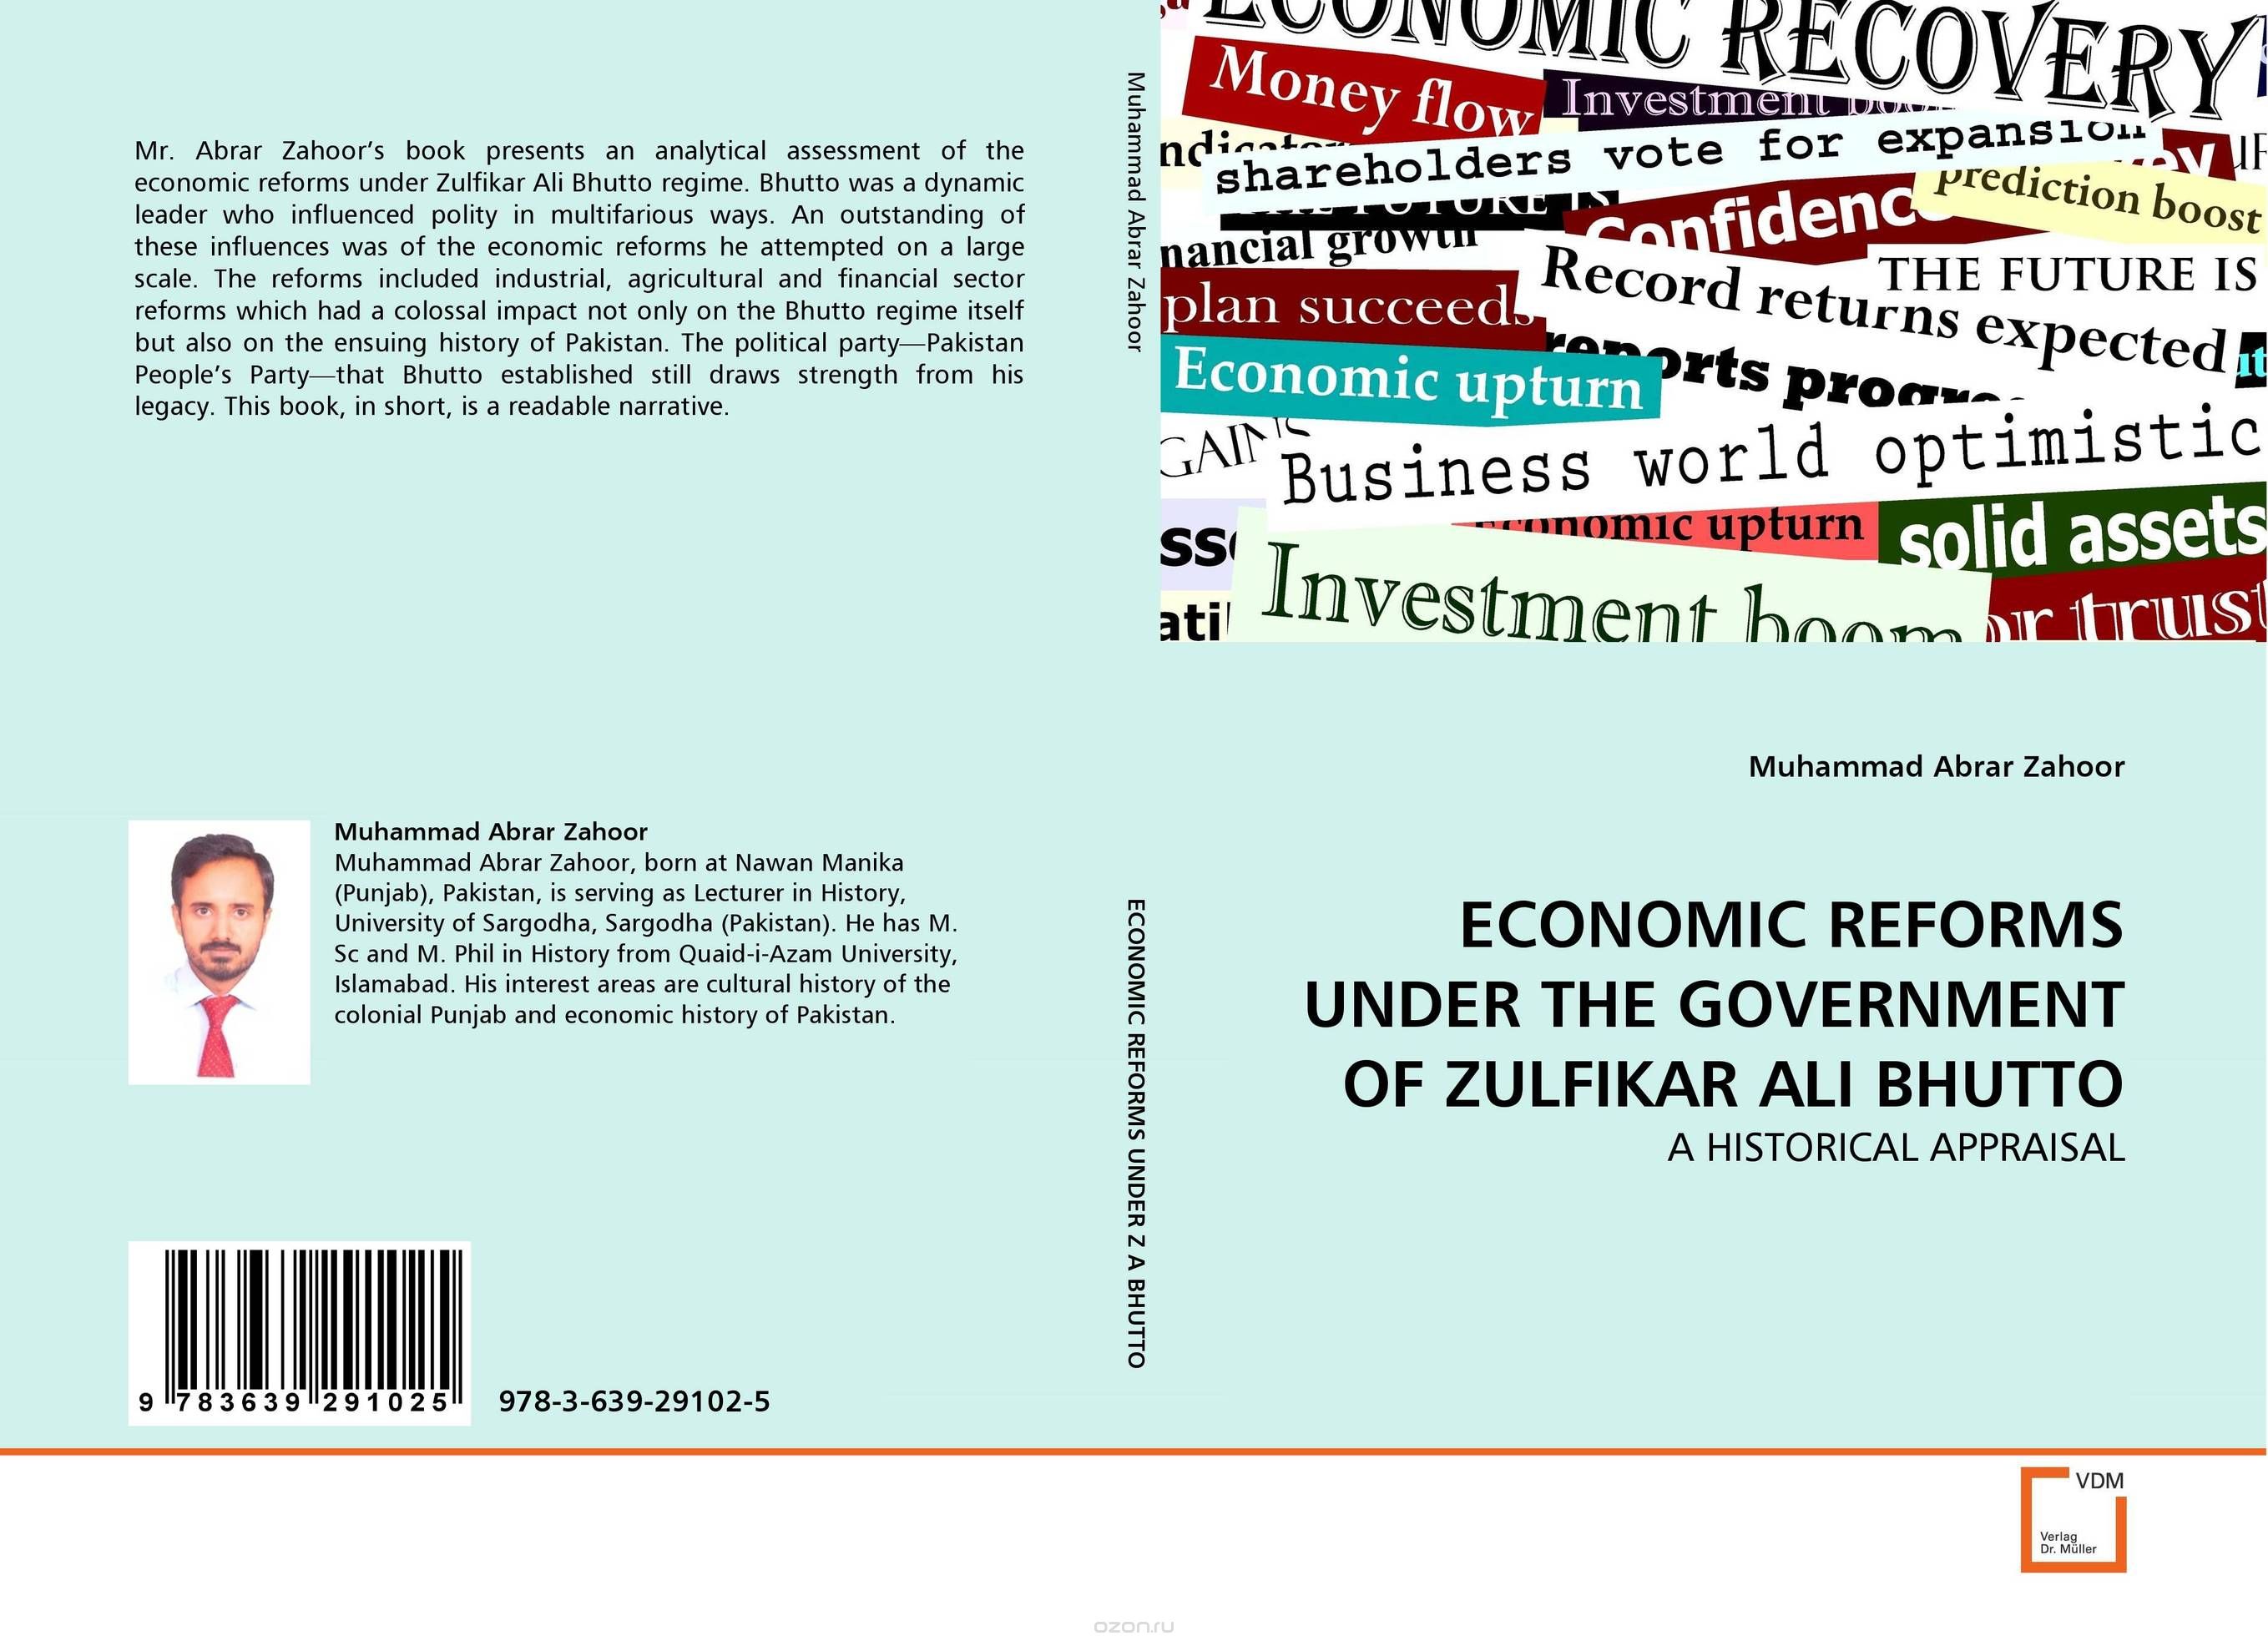 ECONOMIC REFORMS UNDER THE GOVERNMENT OF ZULFIKAR ALI BHUTTO